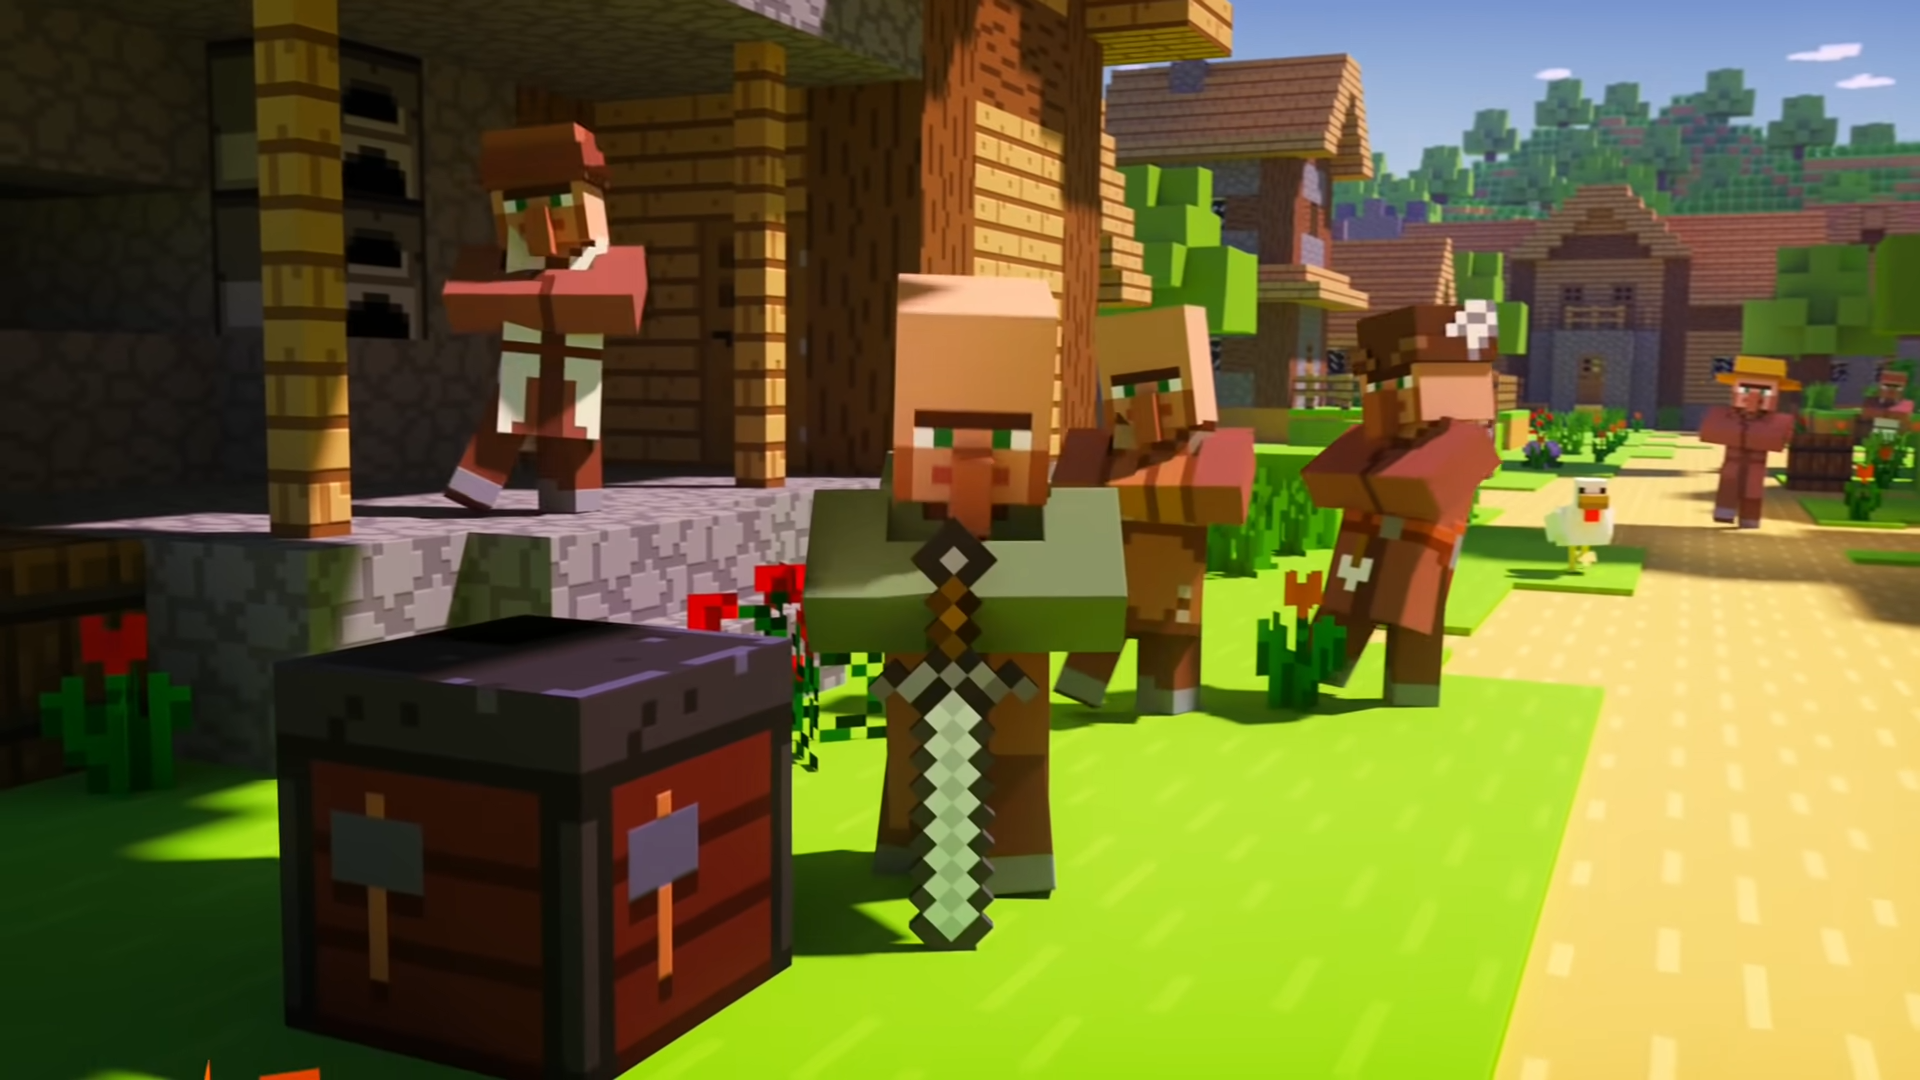 Penduduk desa berdiri di sekitar desa Minecraft